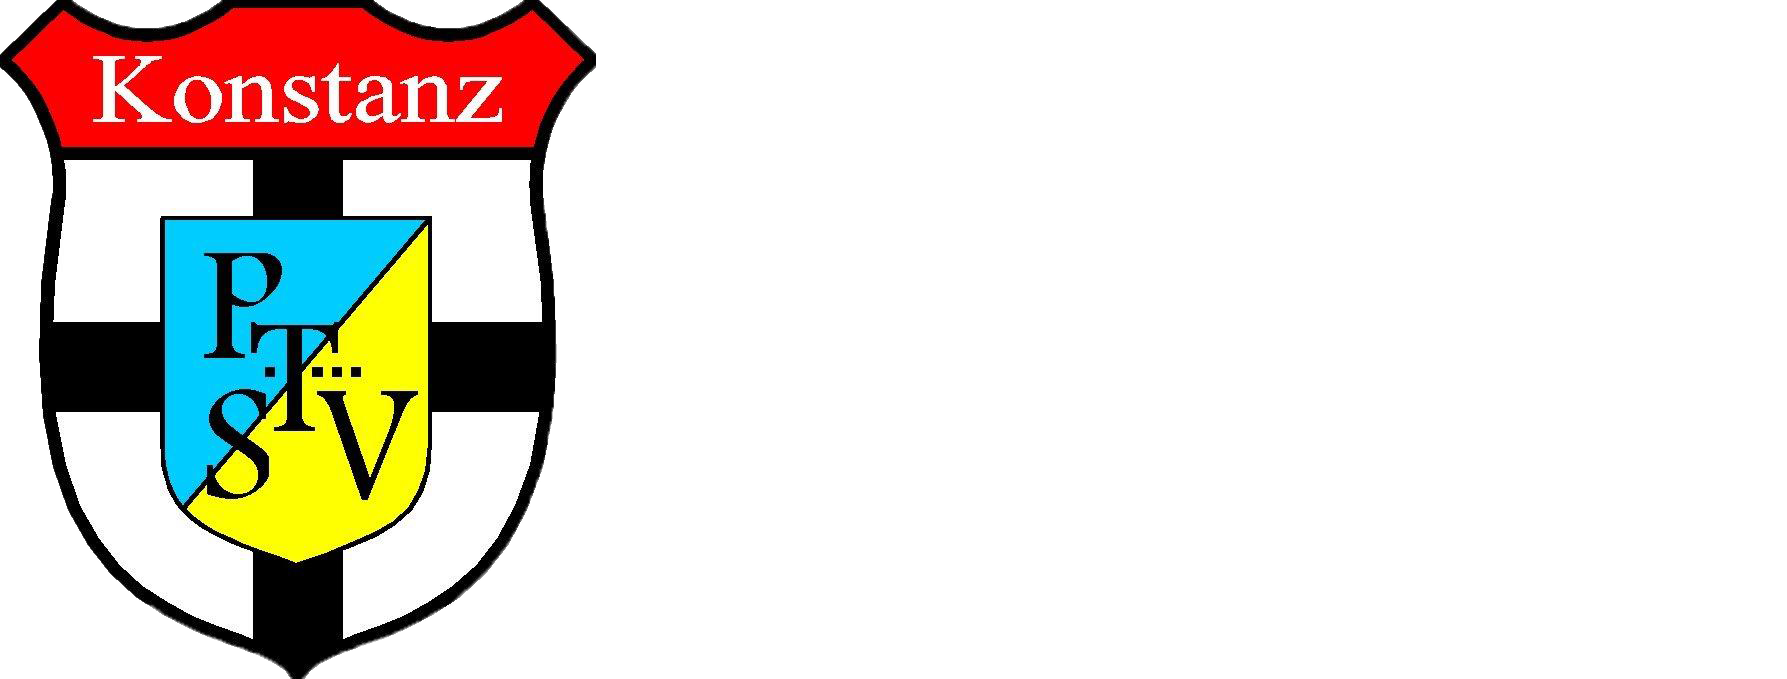 Post-Telekom Sportverein Konstanz e.V